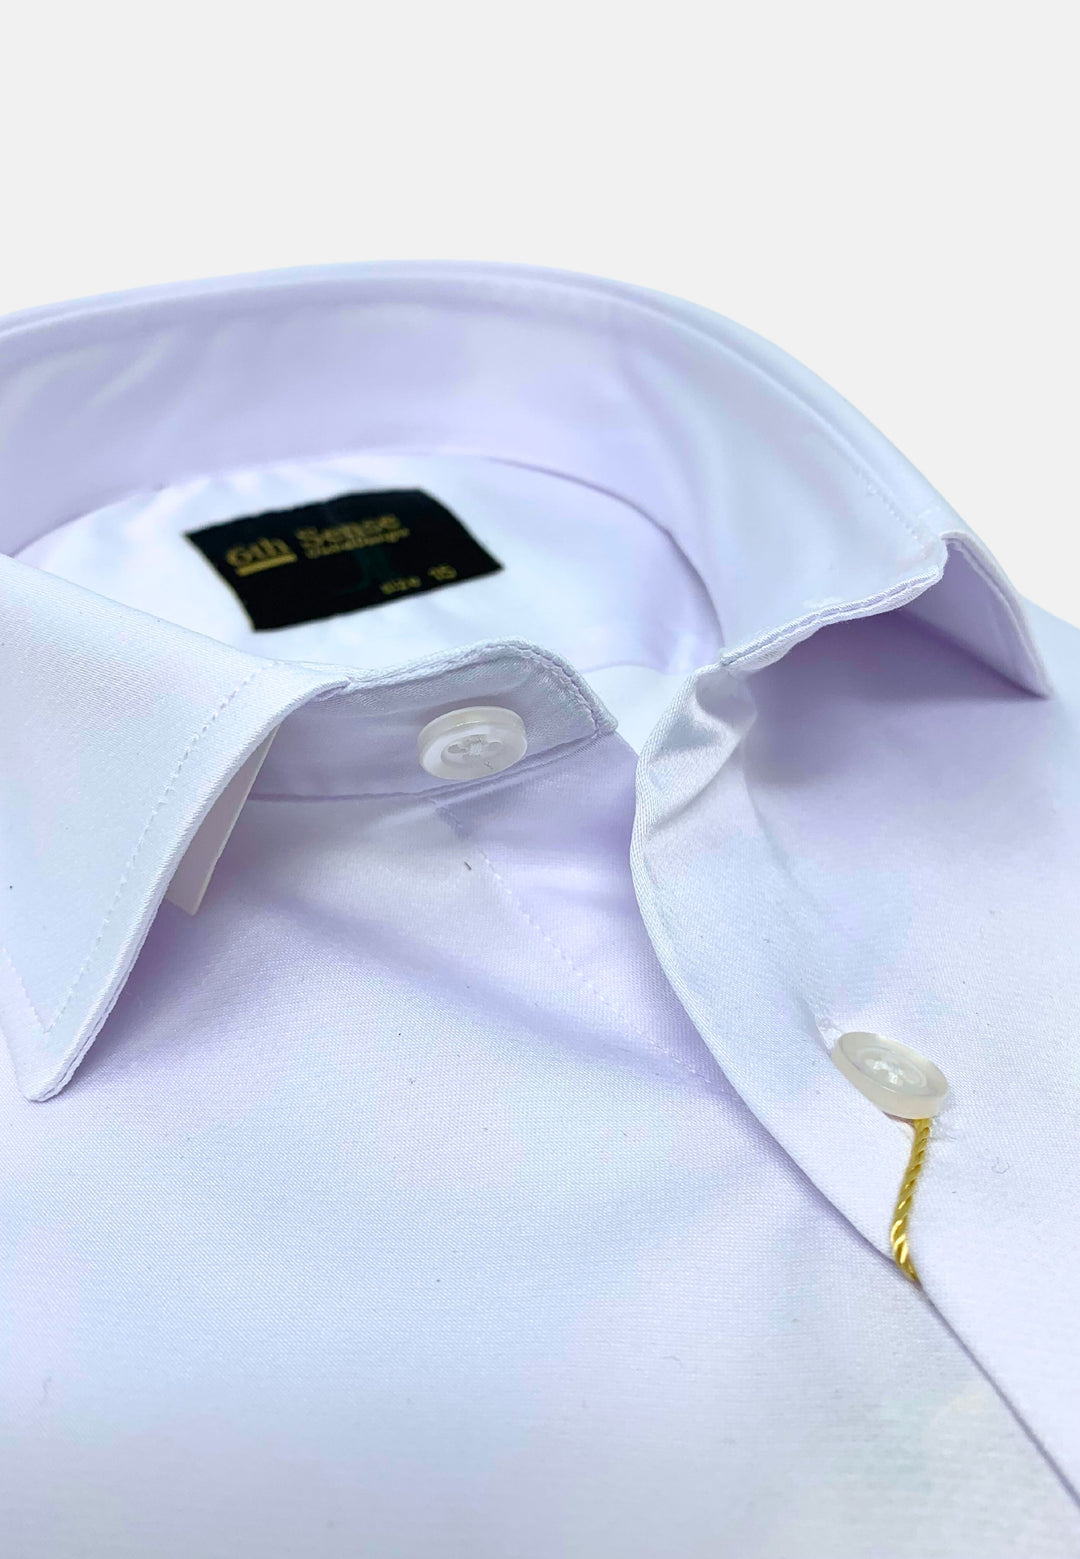 6th Sense Formal Shirt | Long Sleeve | White